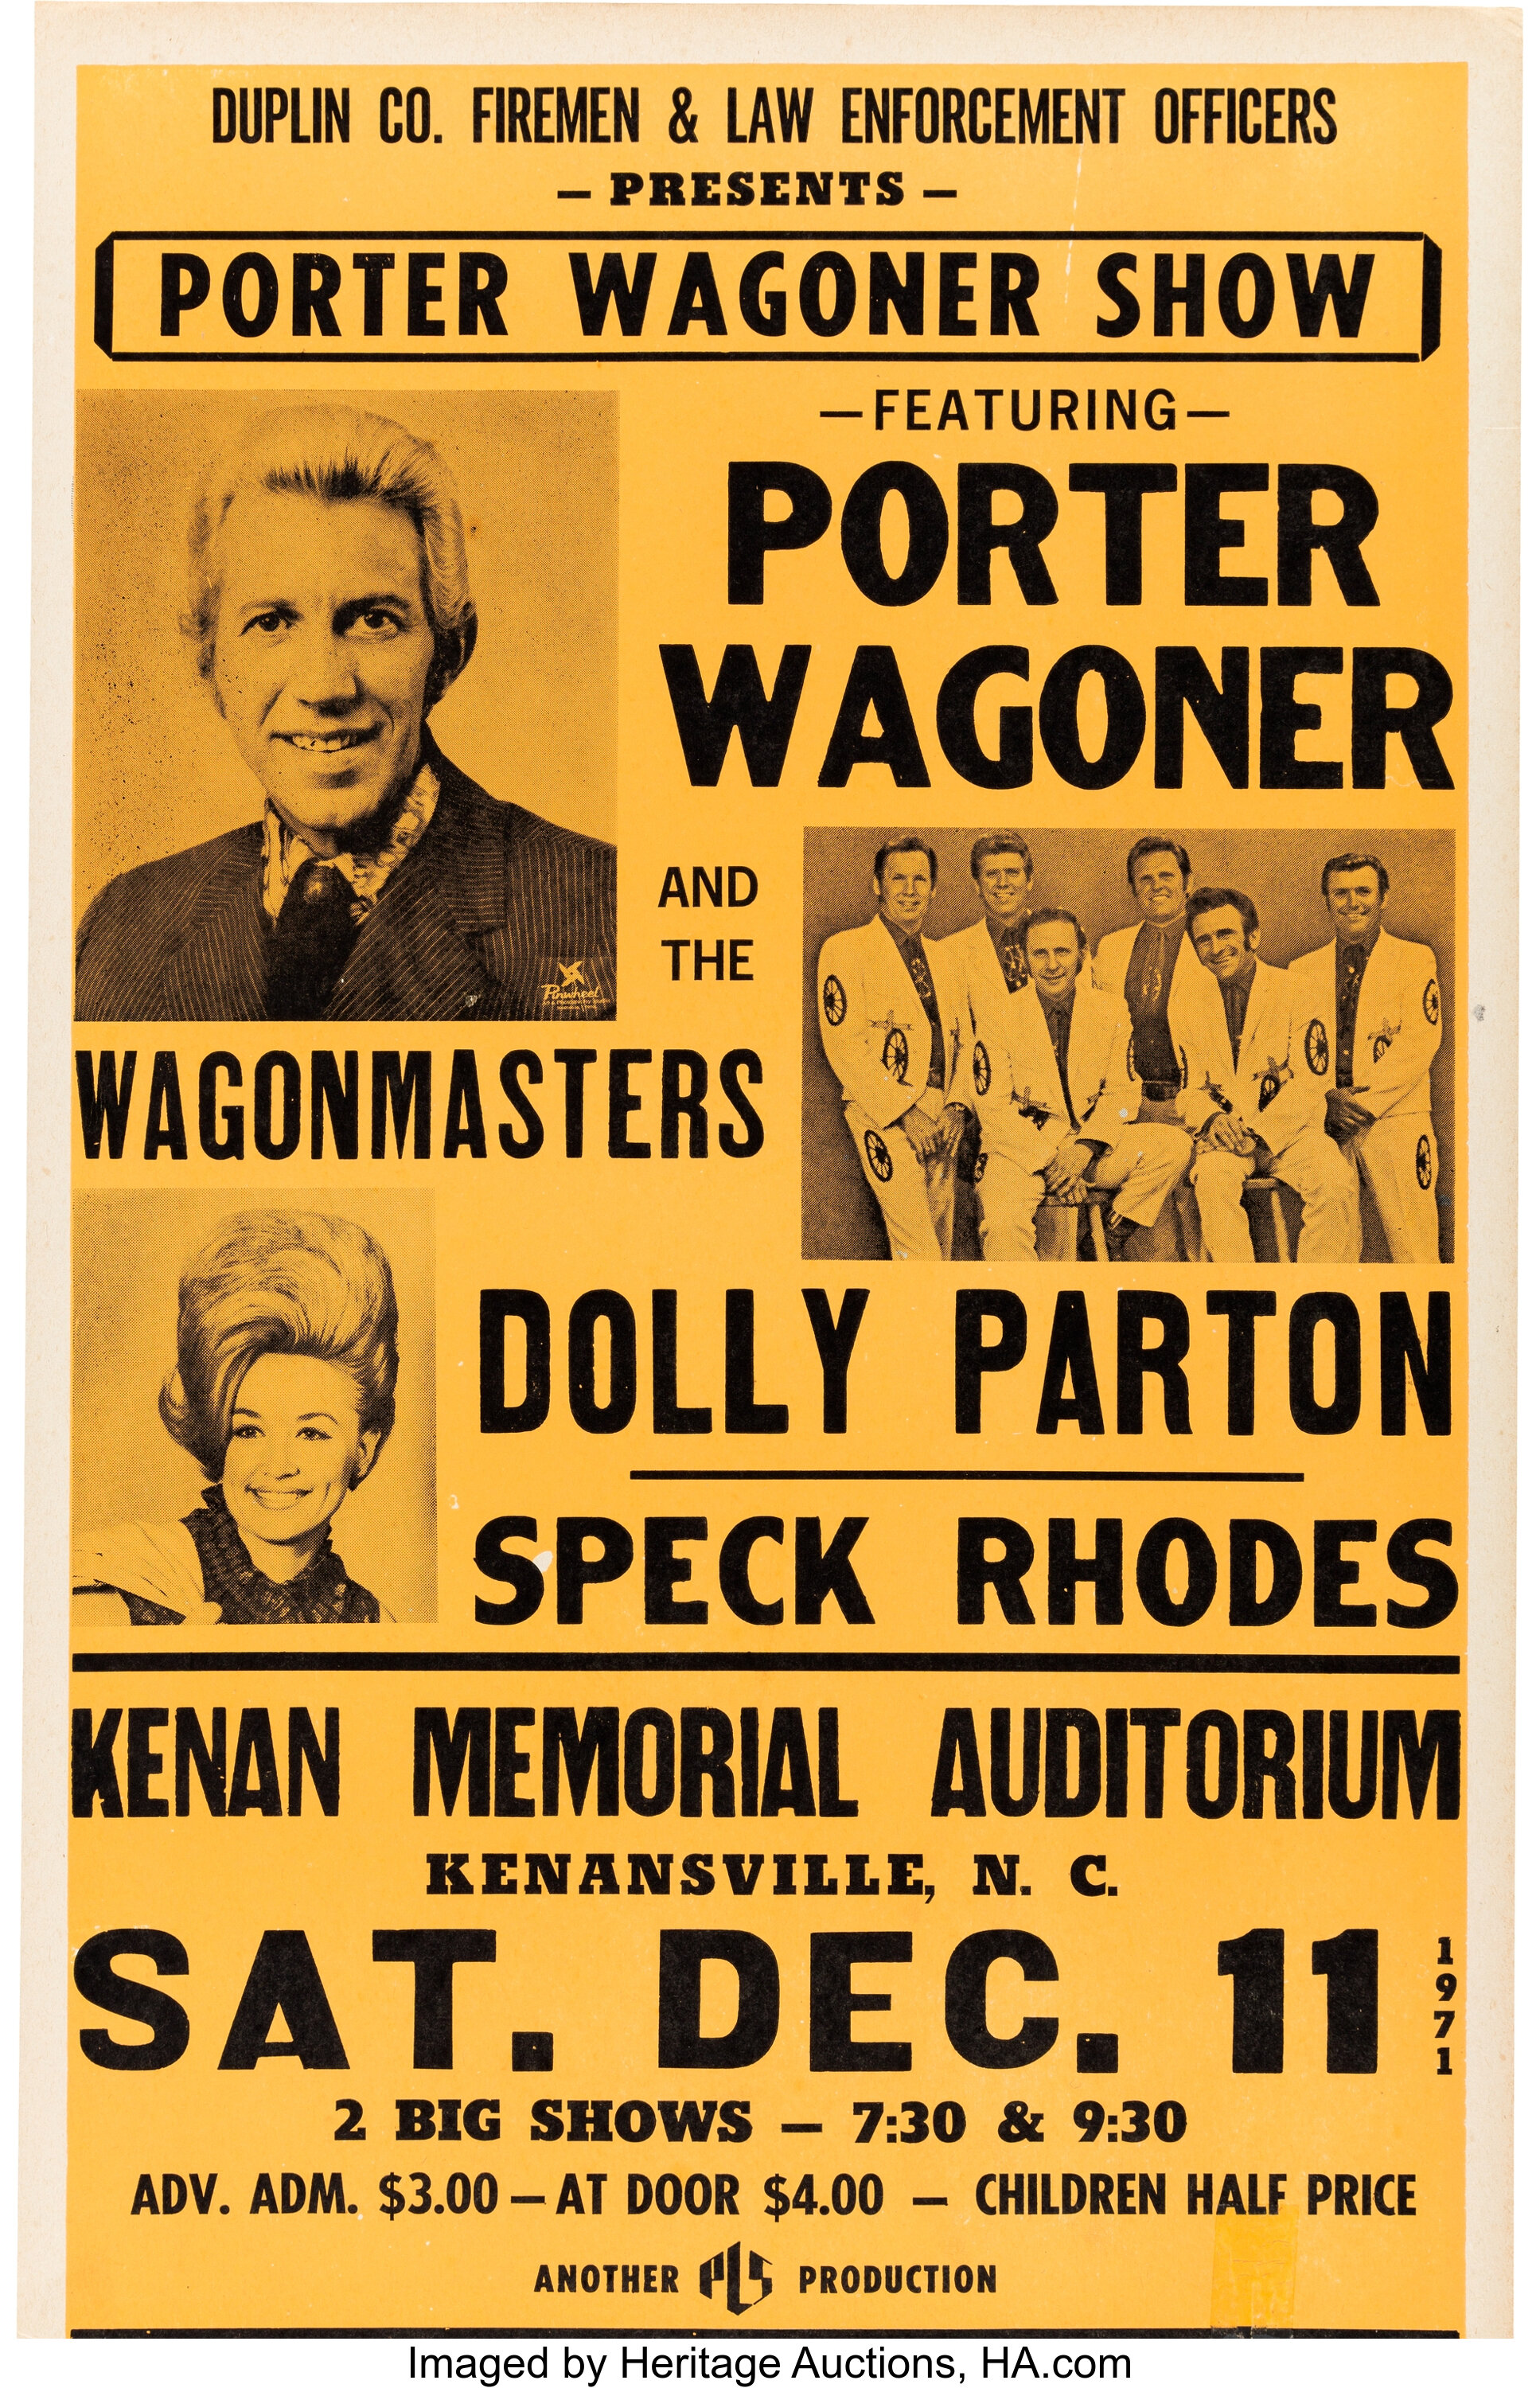 hierarki eksekverbar variabel Dolly Parton/Porter Wagoner Kenan Memorial Auditorium Concert | Lot #89706  | Heritage Auctions